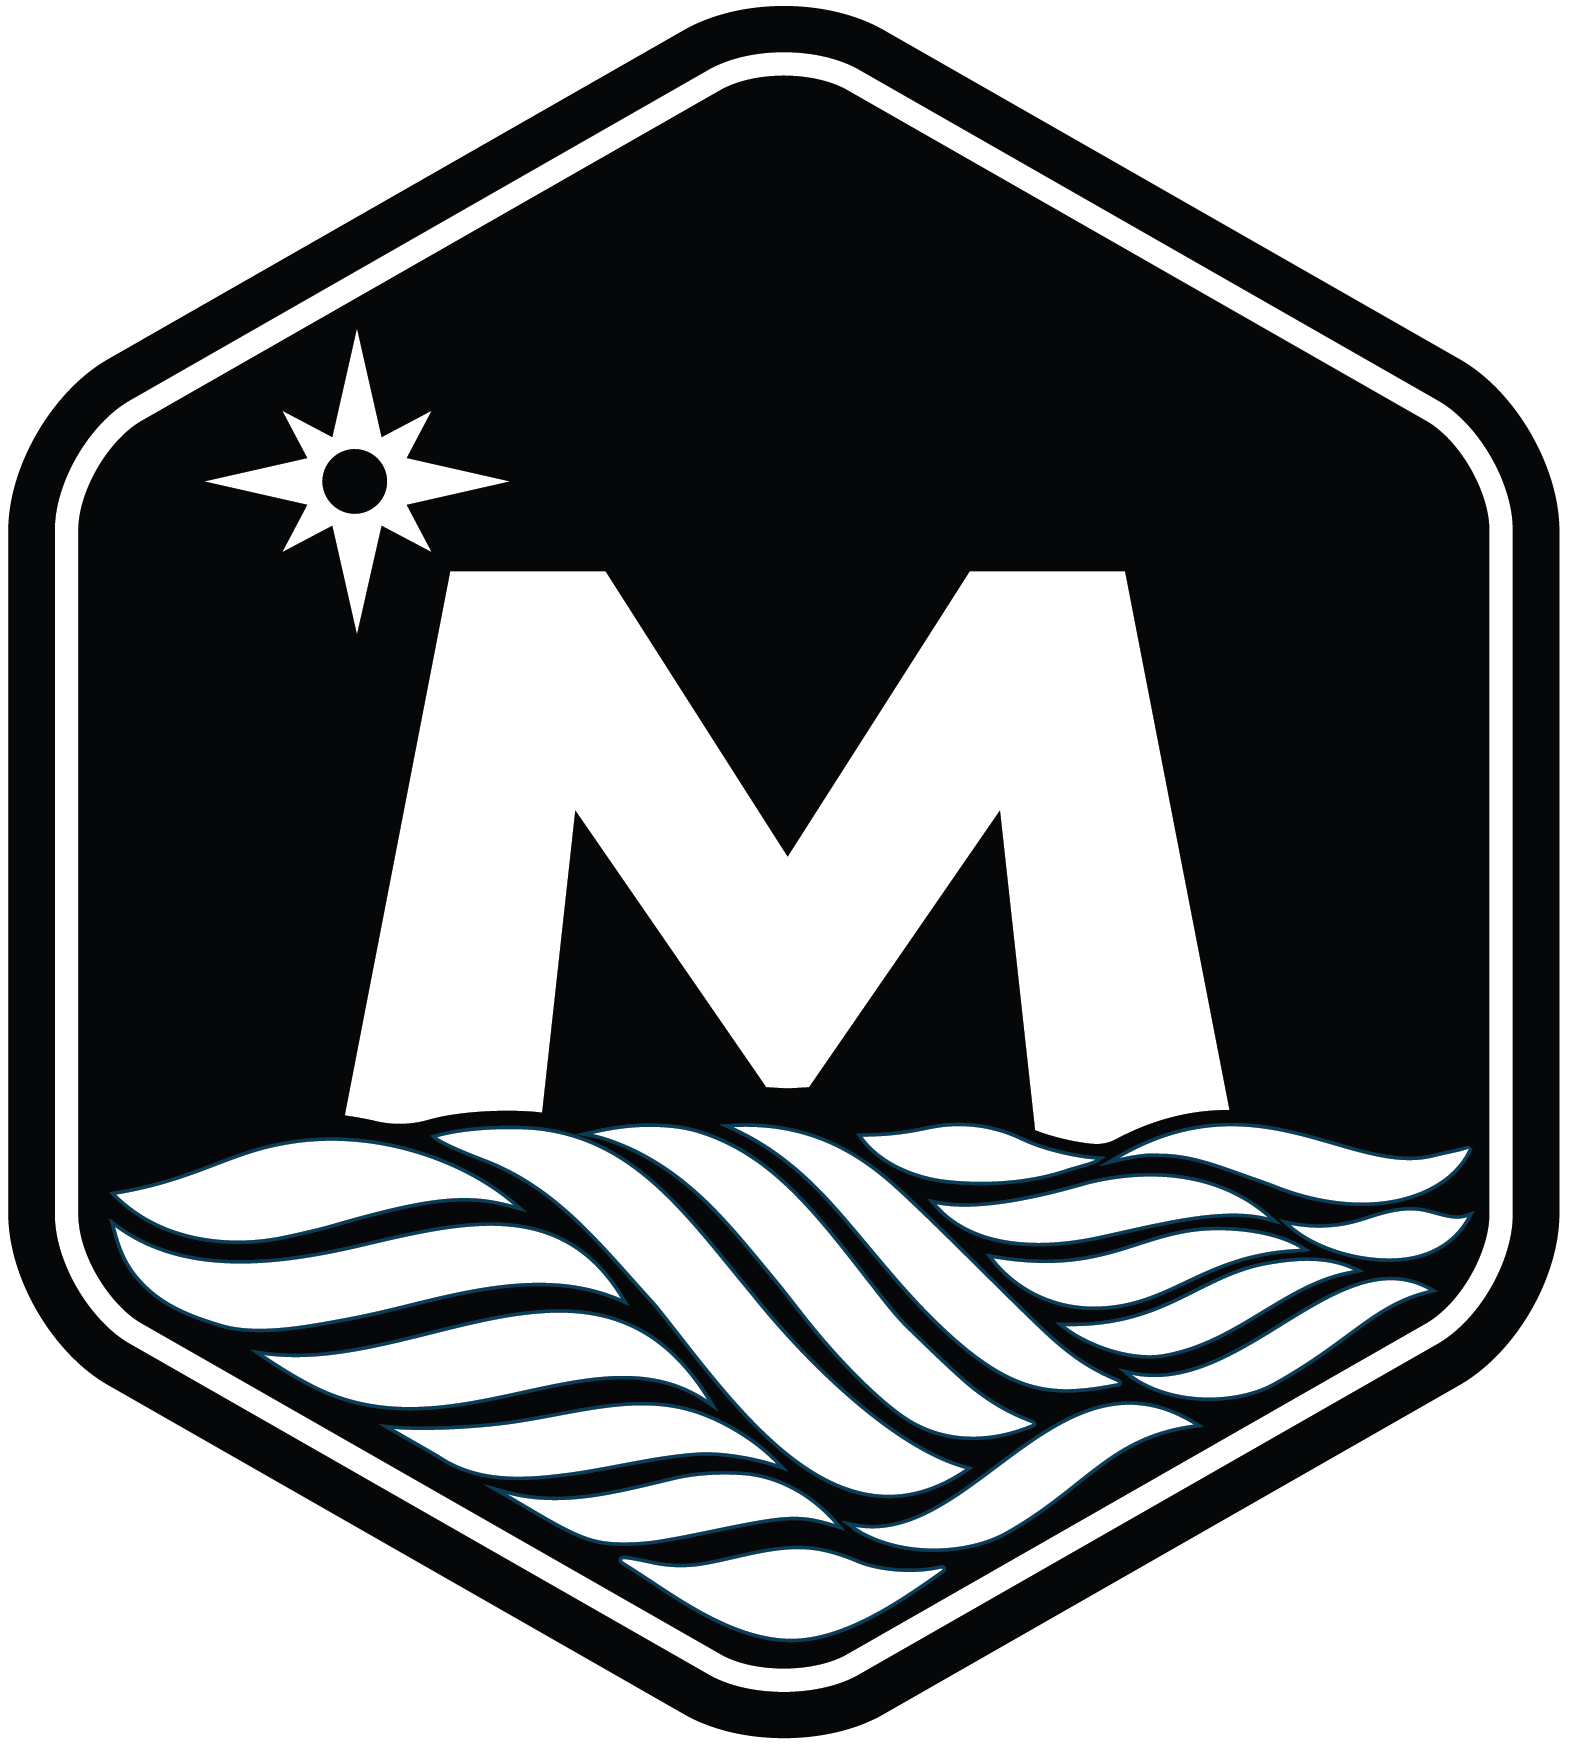 Northwest Maritime Center logo